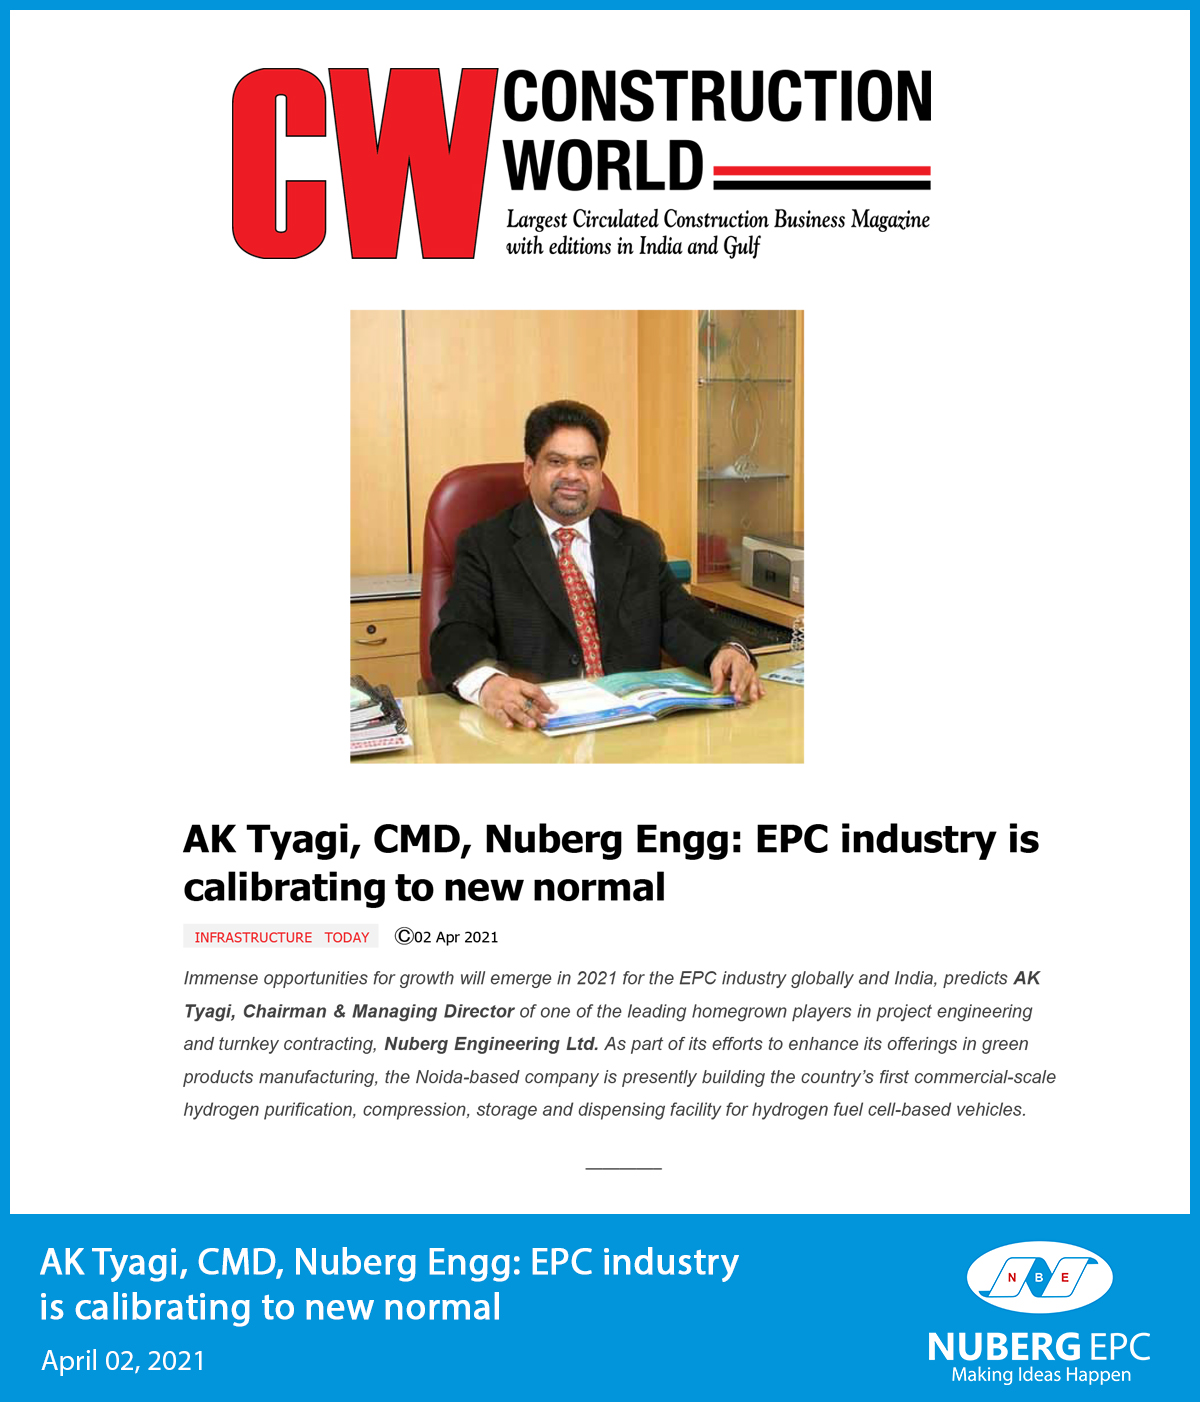 AK Tyagi, Chairman & Managing Director, Nuberg Engineering Ltd., interview with Construction World